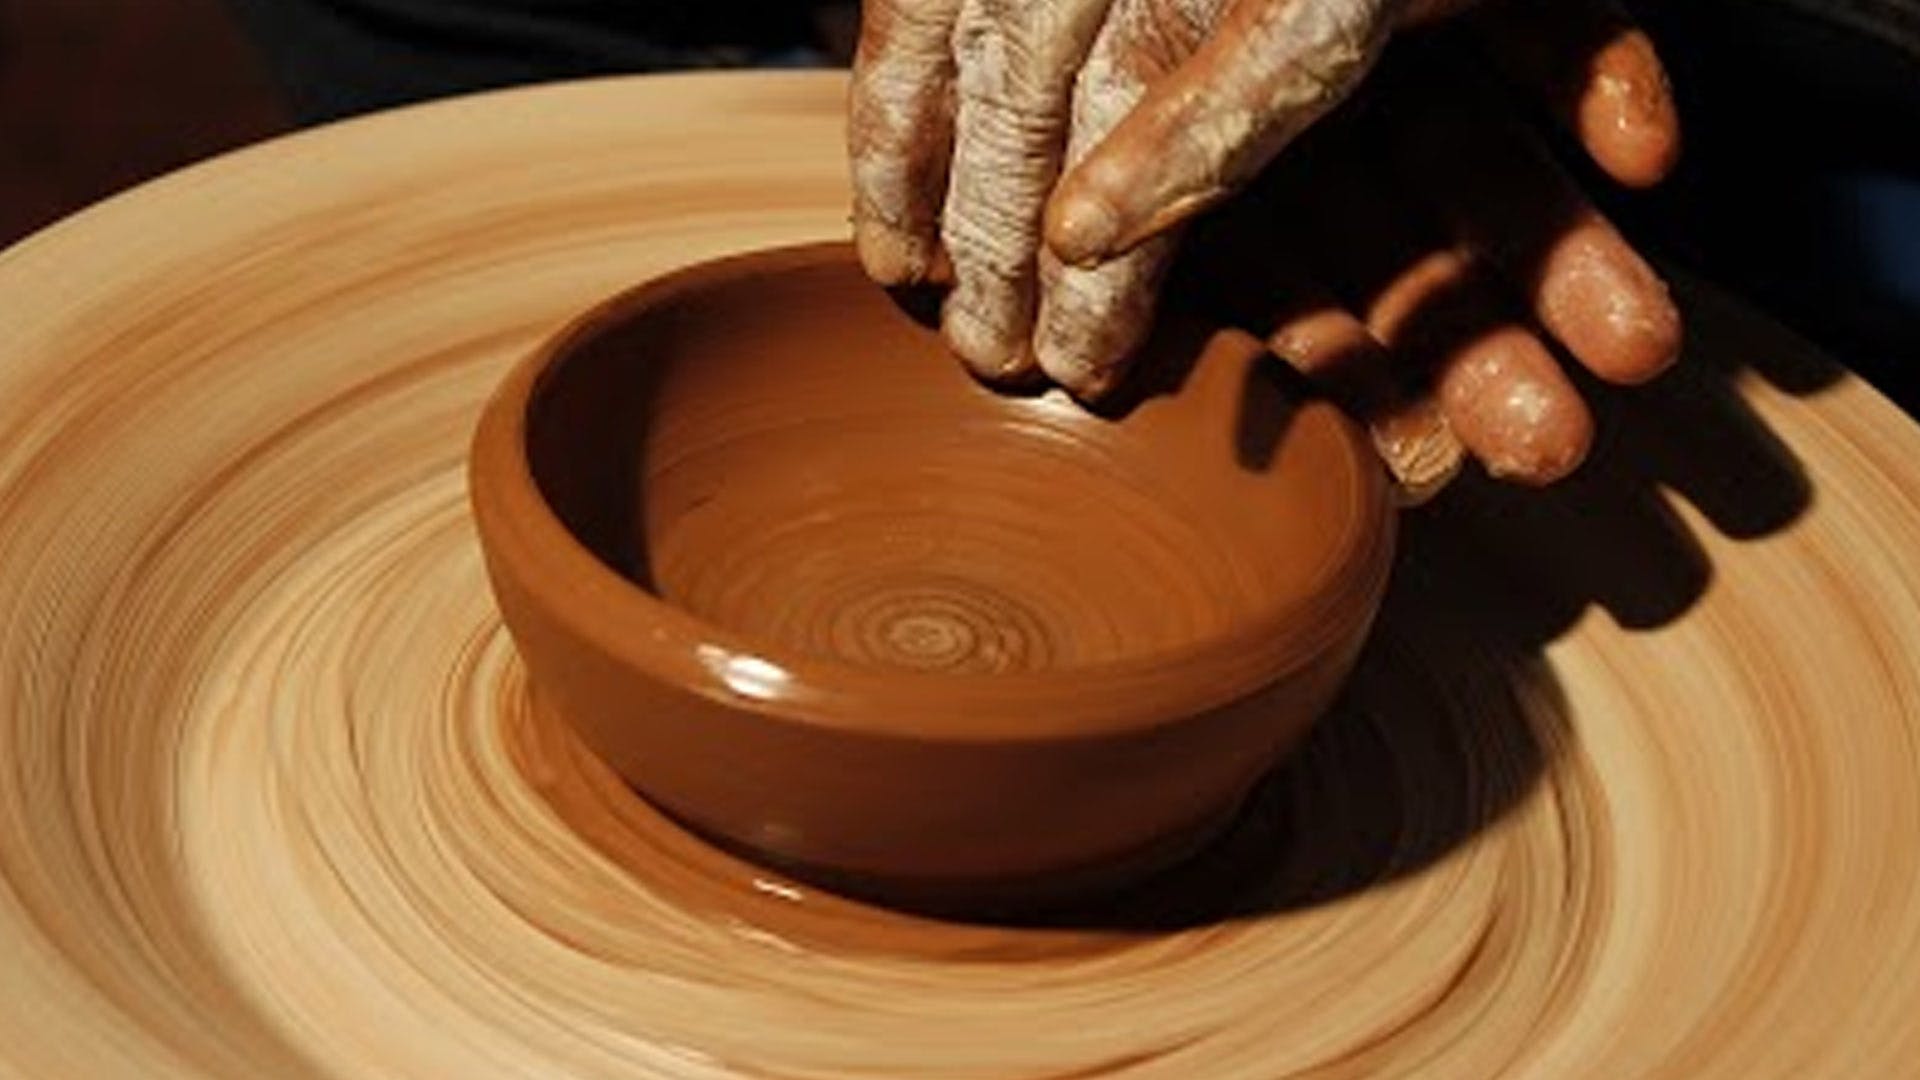 Potter's wheel,Pottery,Bowl,earthenware,Wheel,Art,Machine,Clay,Automotive wheel system,Auto part